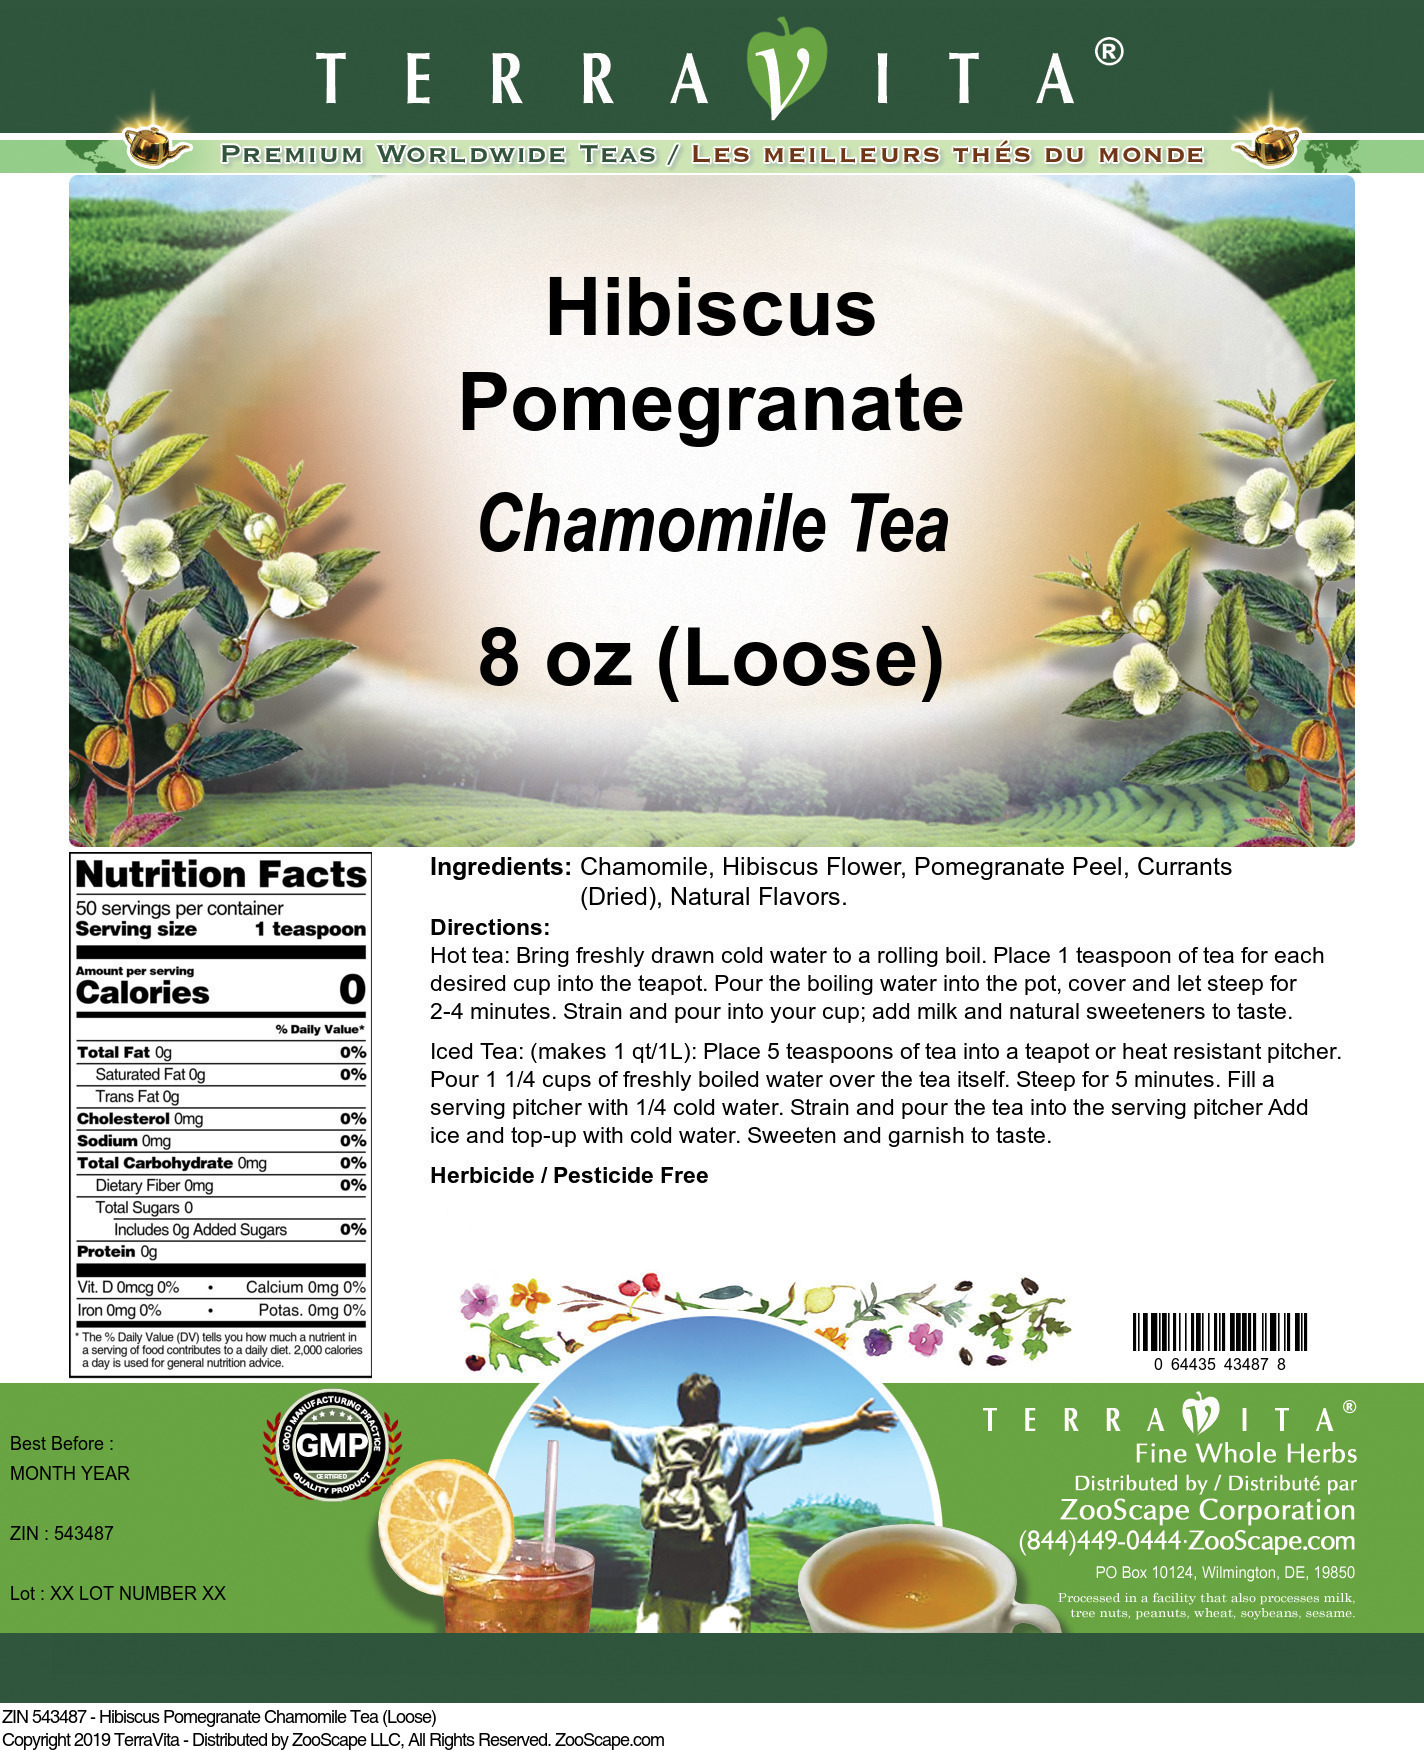 Hibiscus Pomegranate Chamomile Tea (Loose) - Label